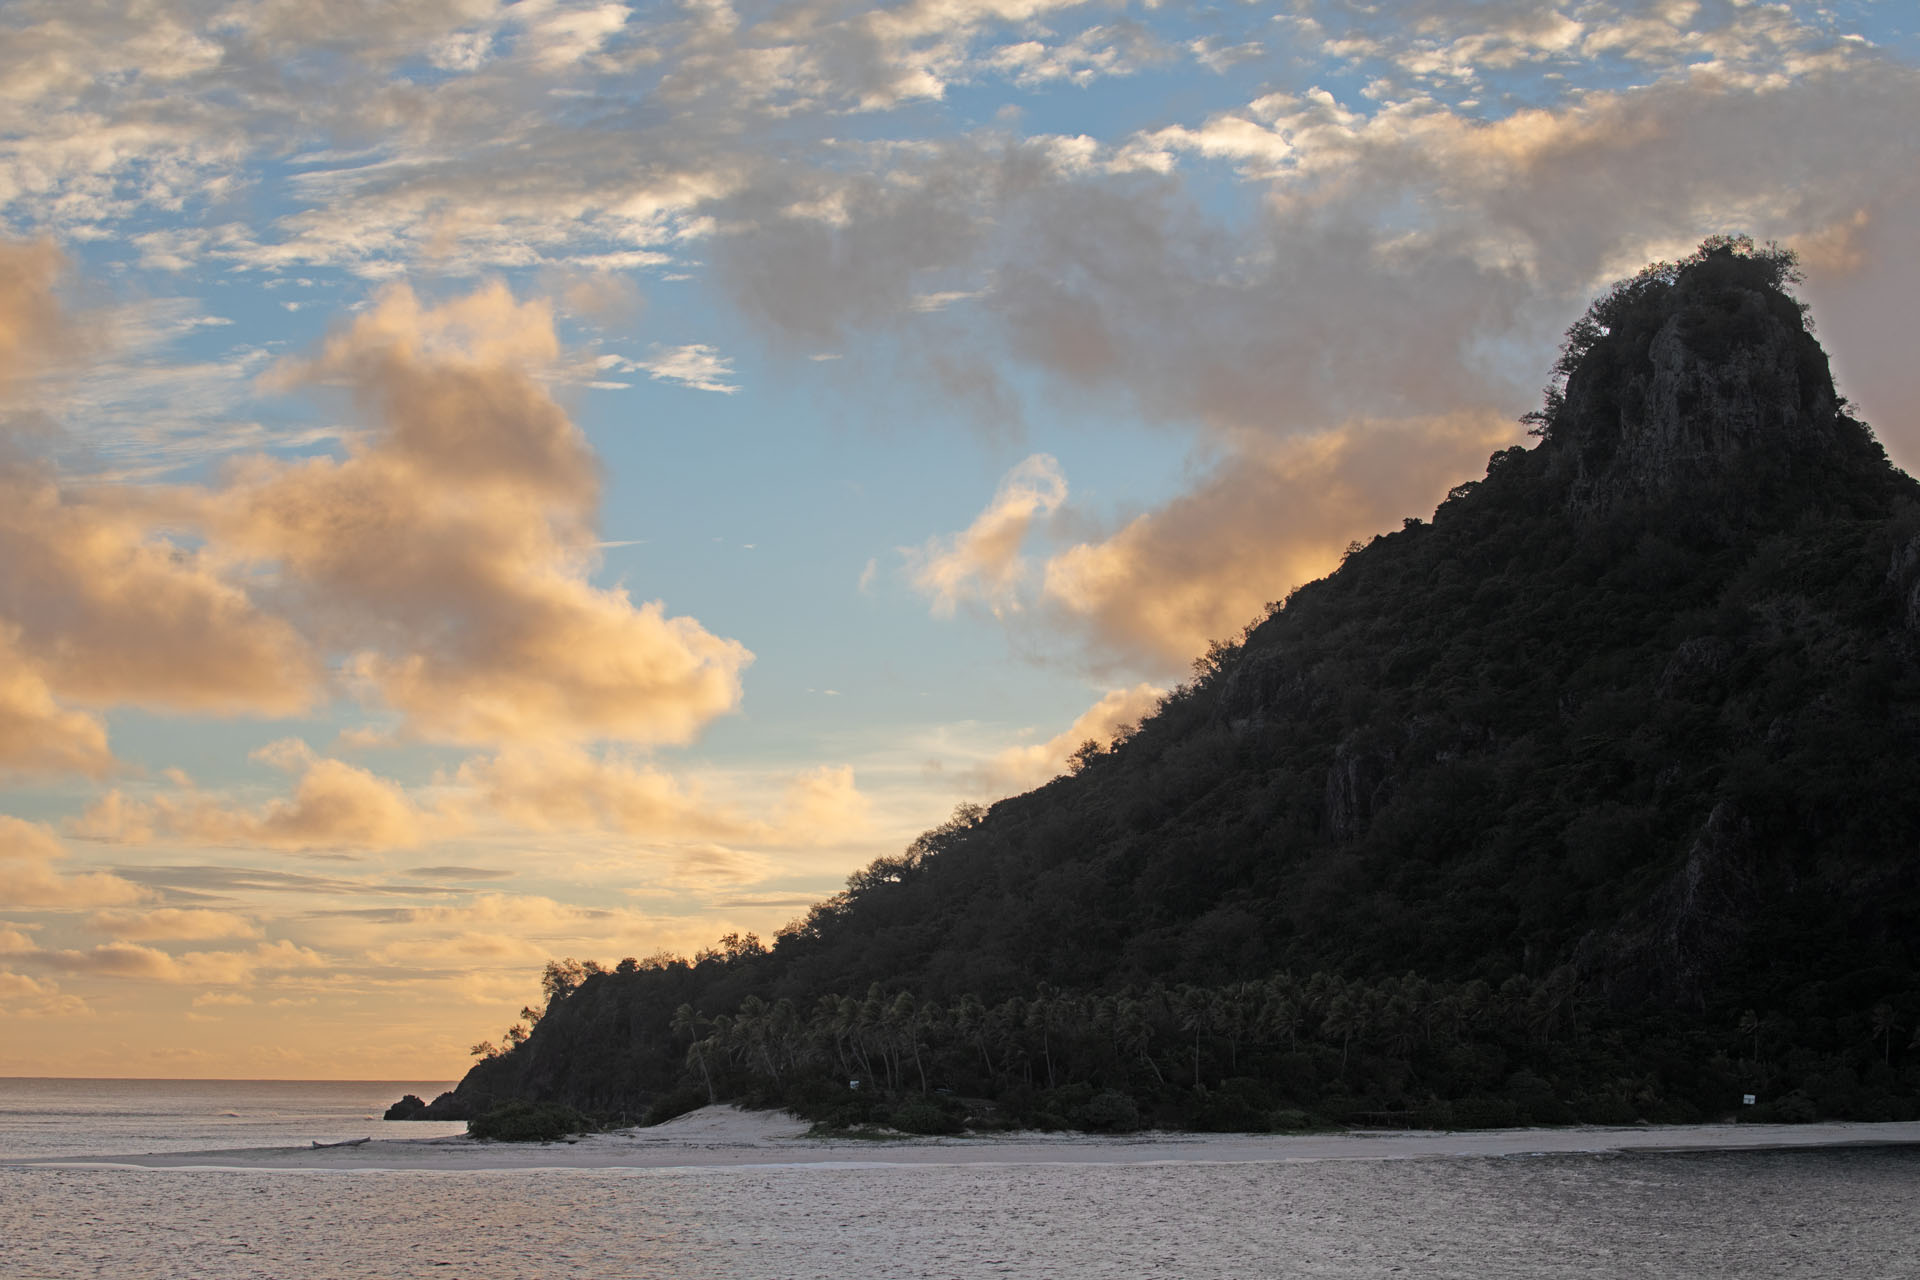 Fiji Sunset (Dec 27, 2021)